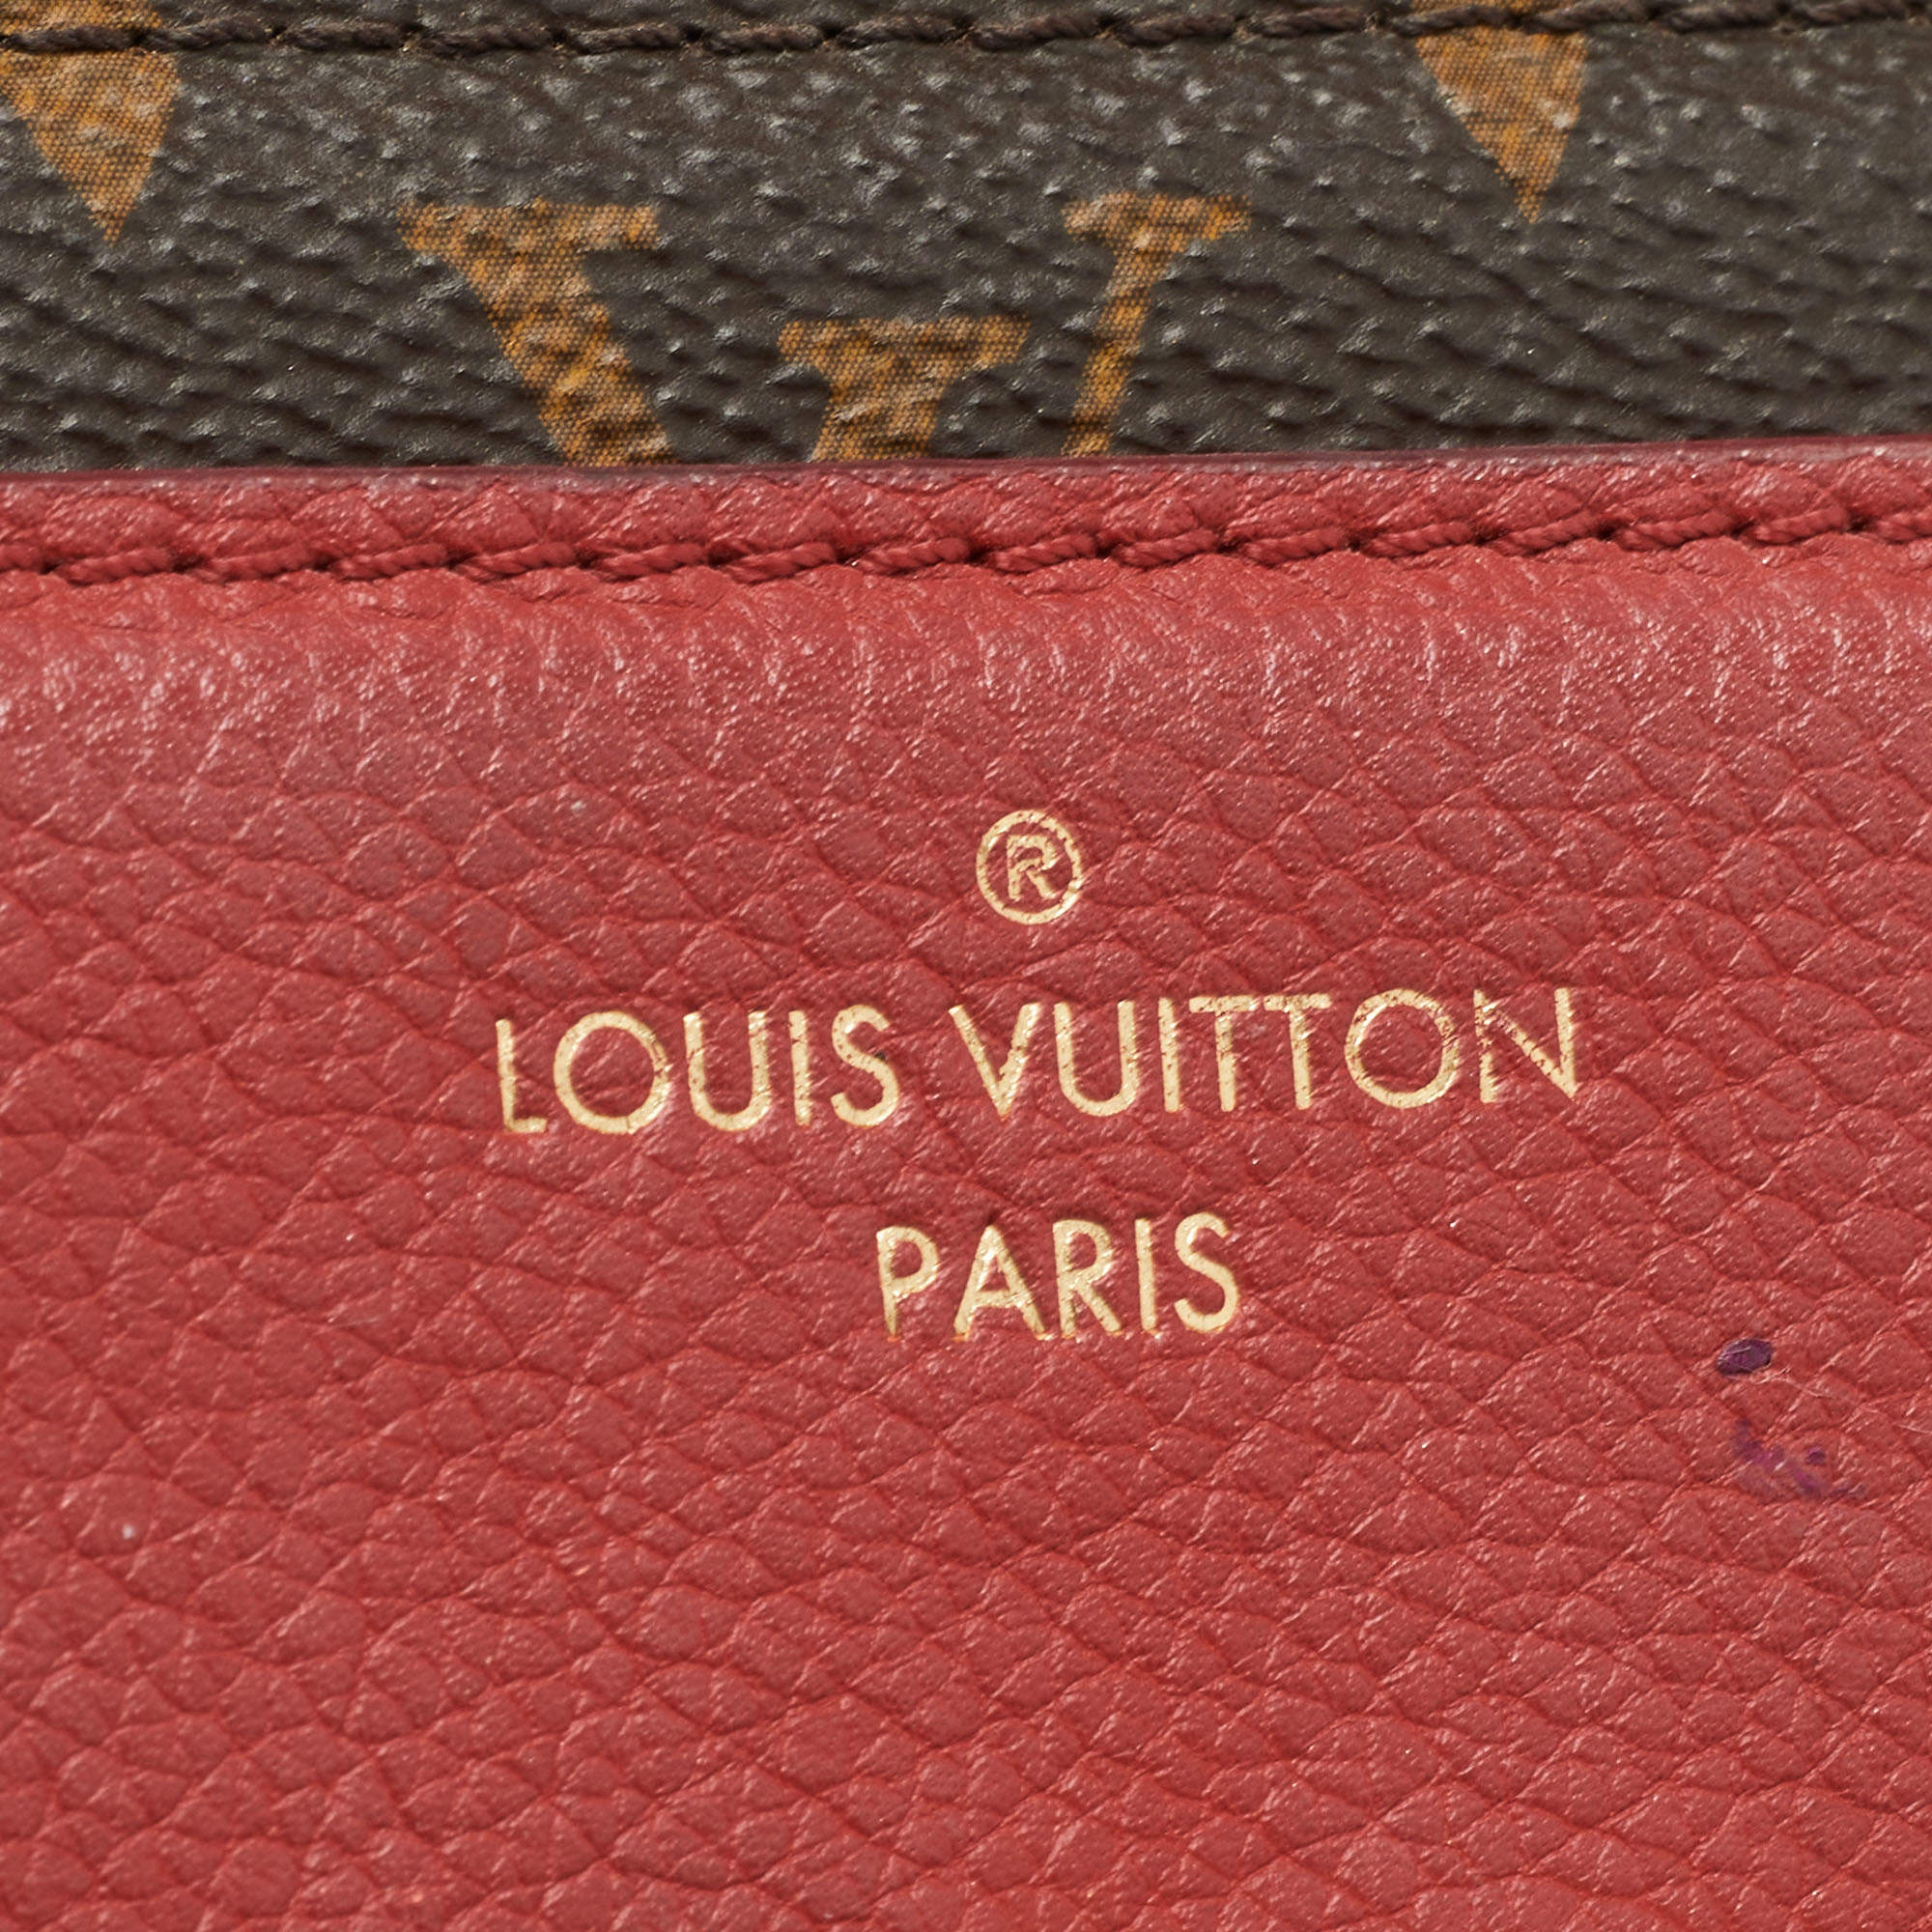 LOUIS VUITTON VICTOIRE IN RED. ‼️FULLSET‼️$2400 RETAIL: $3100